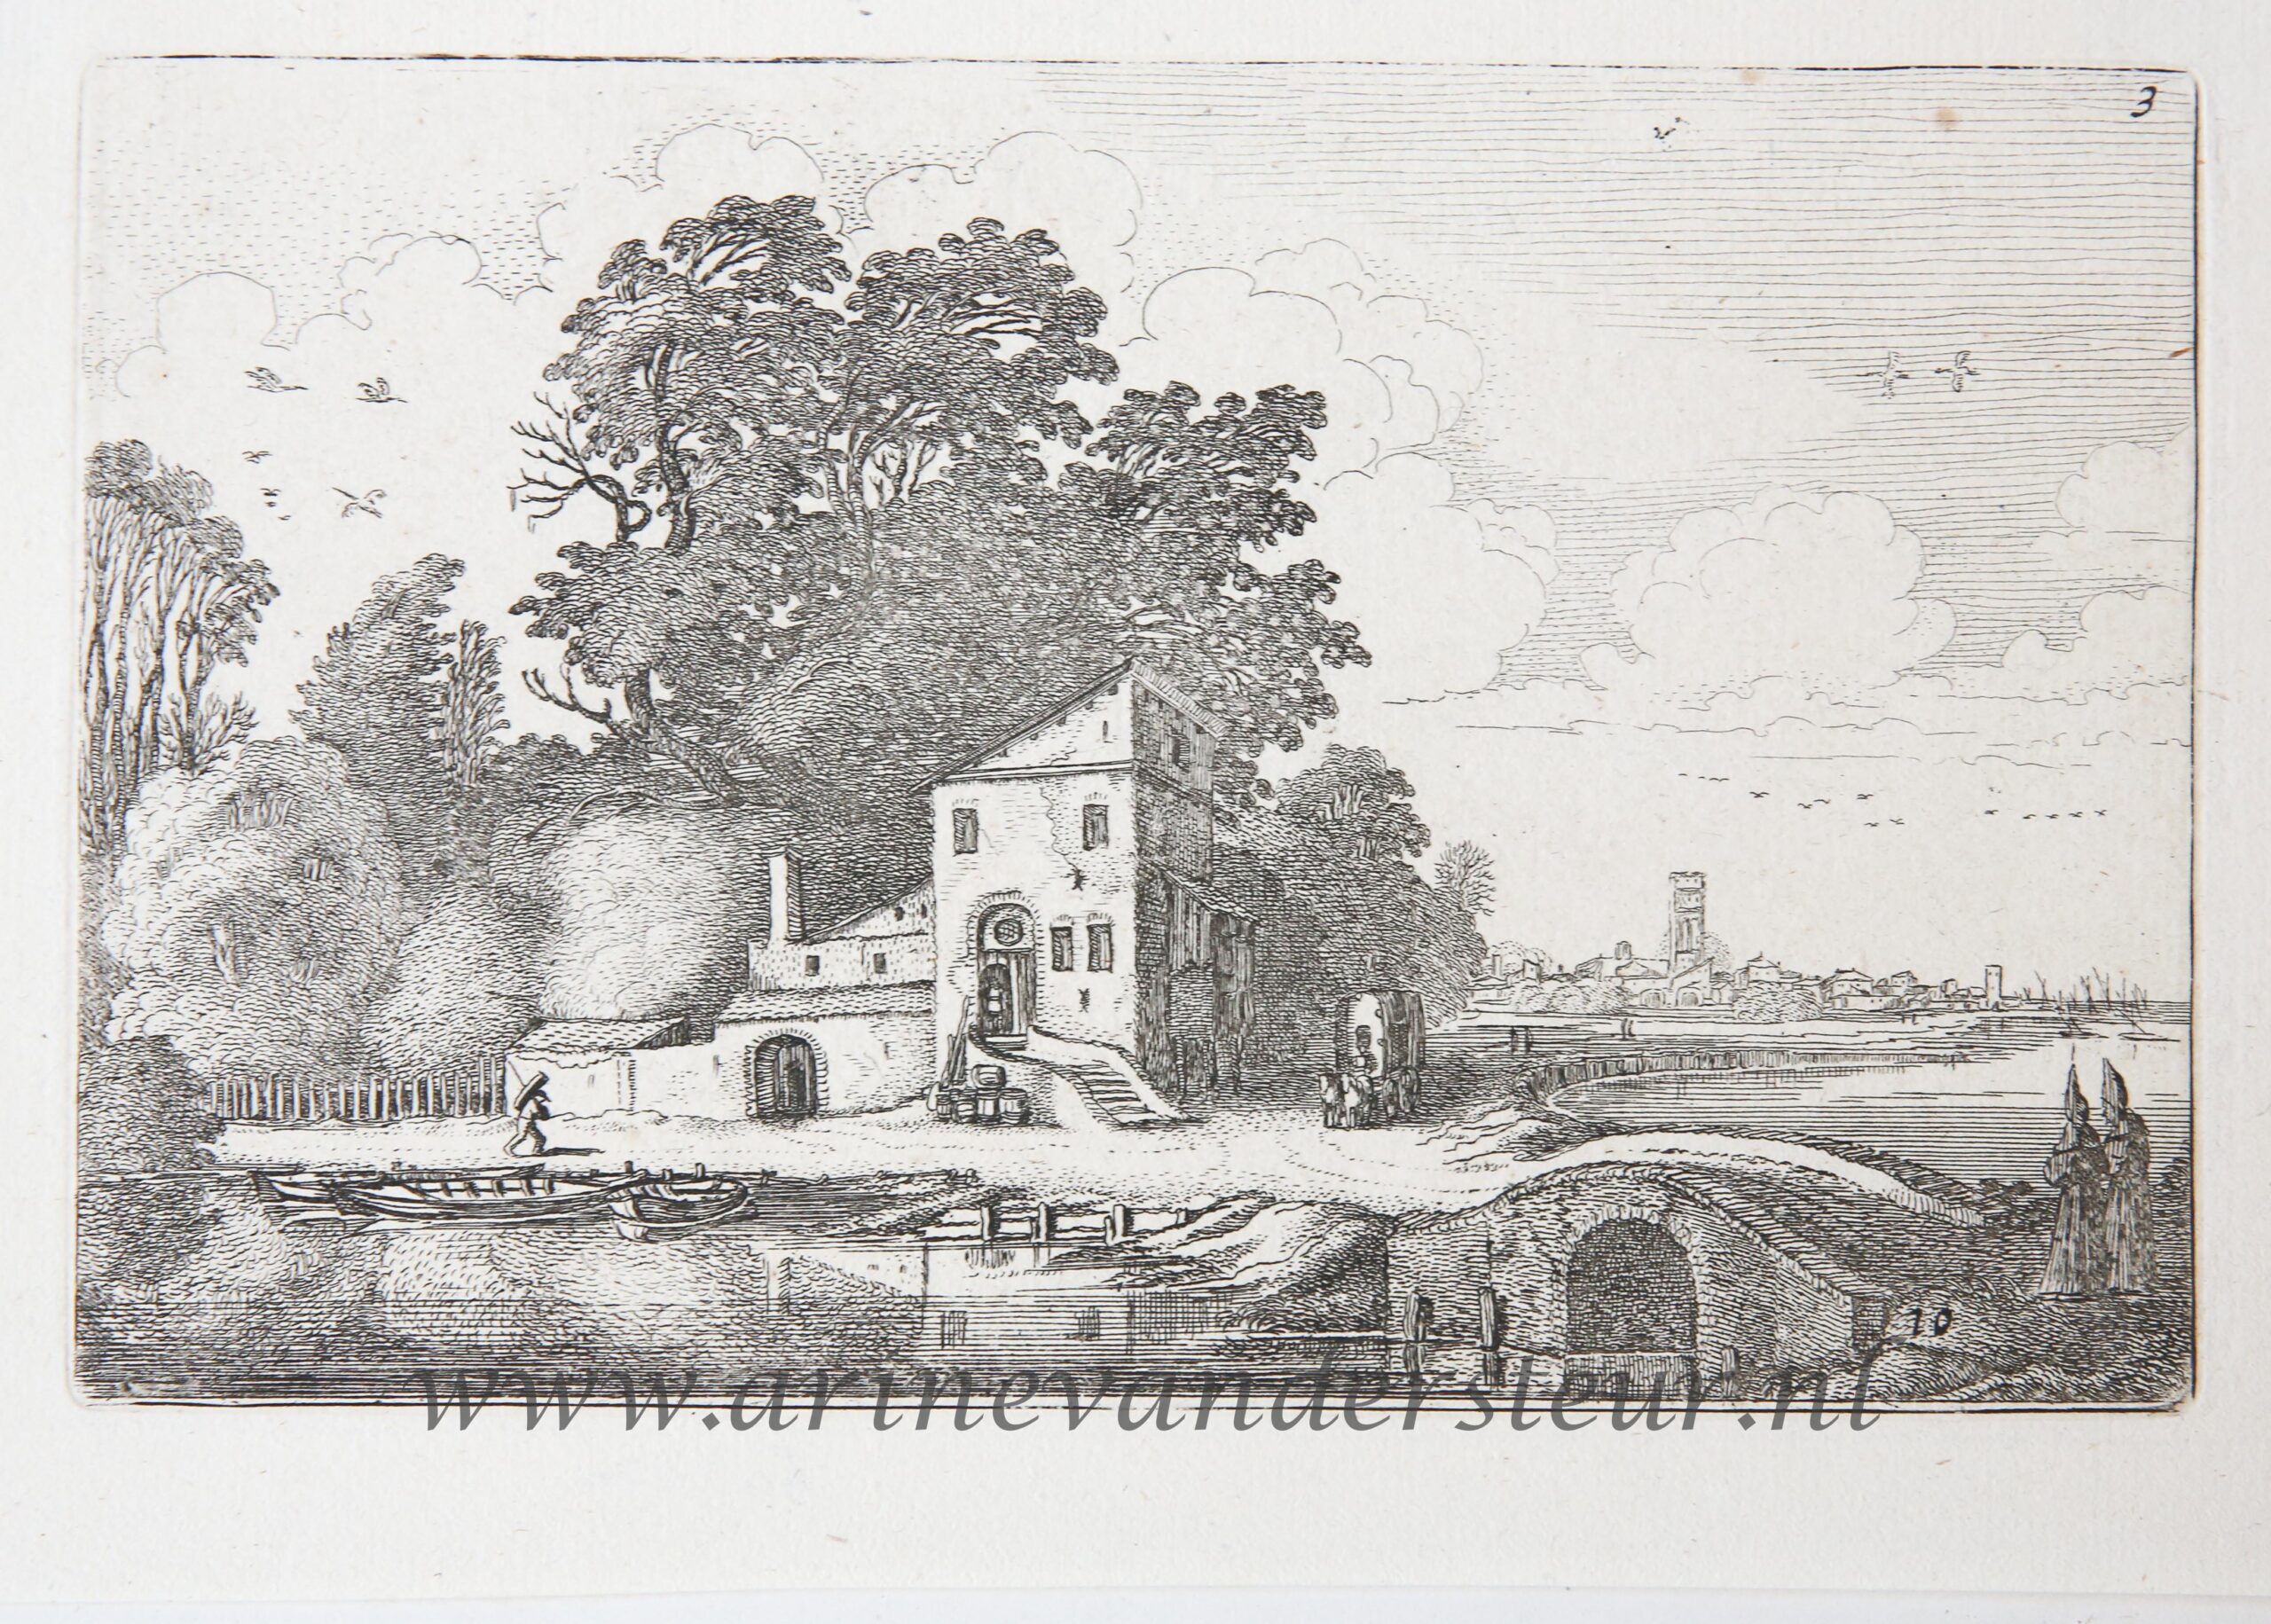 [Antique etching, ets, landscape print] J. v.d. Velde II, House near a stone bridge in a river landscape, published before 1713.